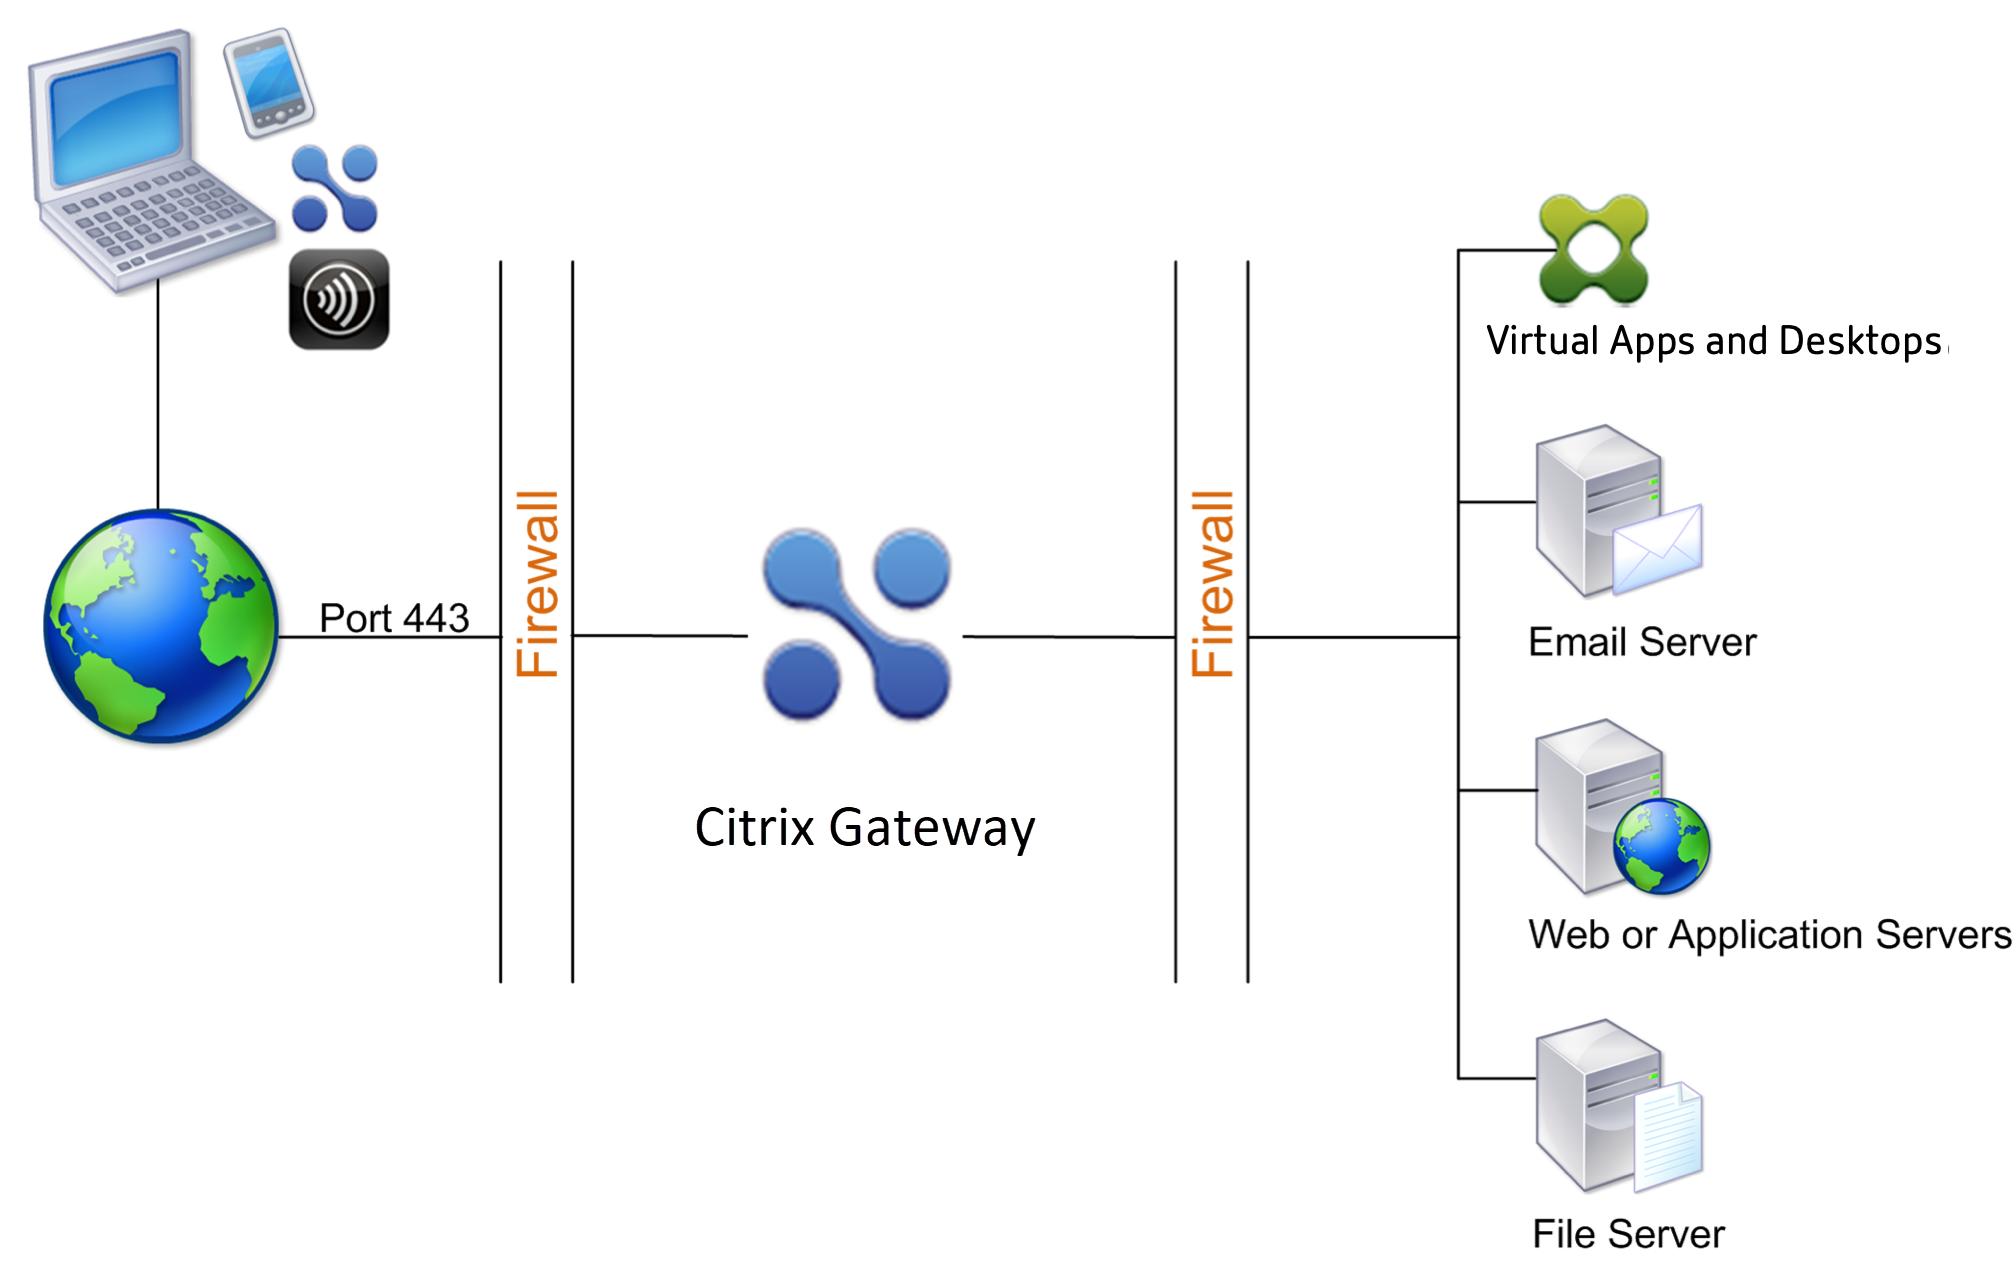 Citrix Gateway deployed in the DMZ